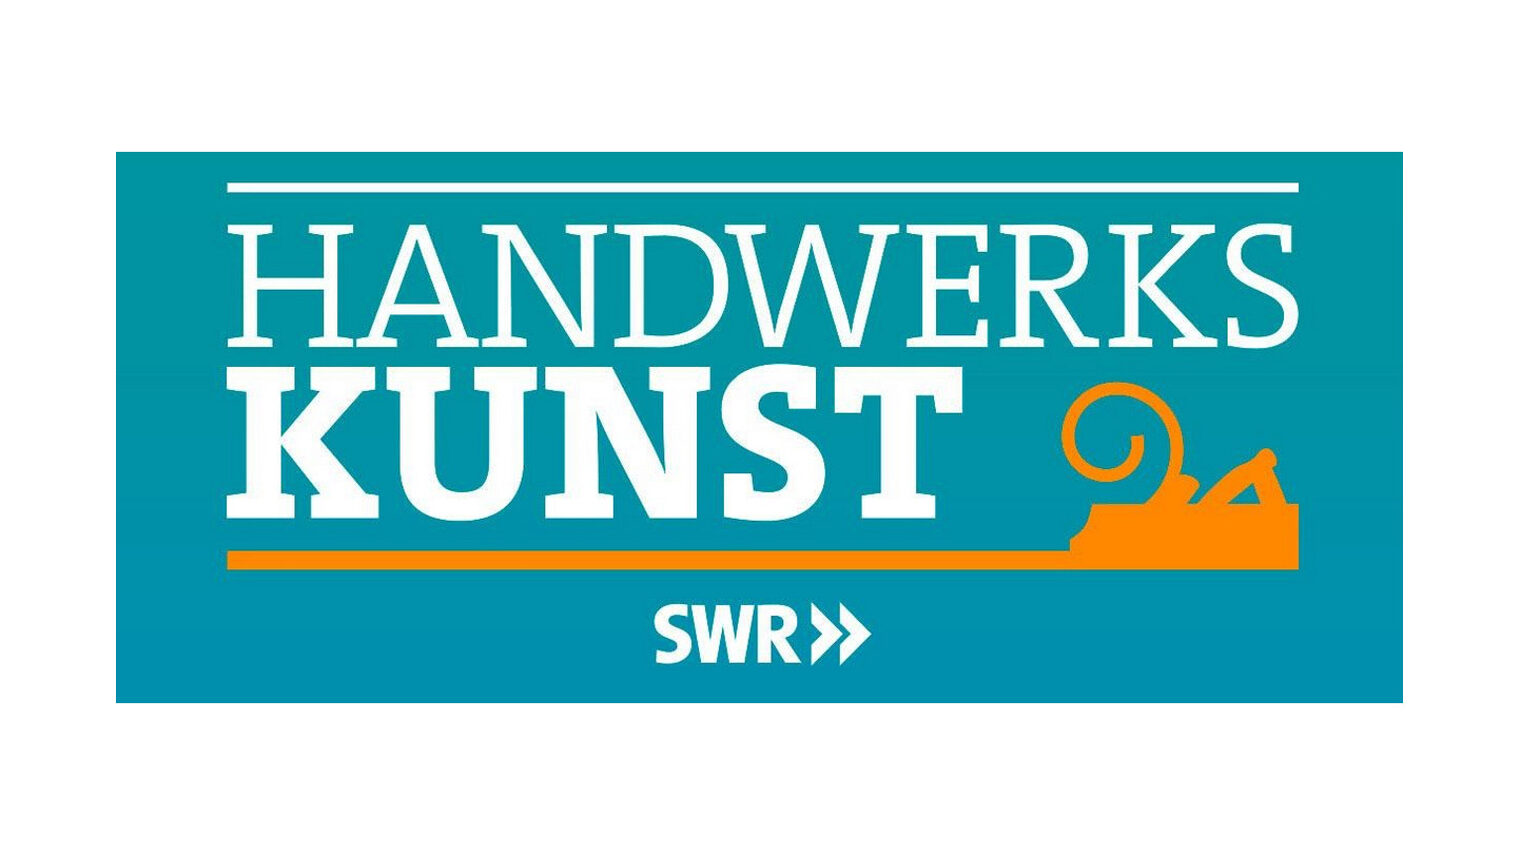 Handwerkskunst SWR Logo_web